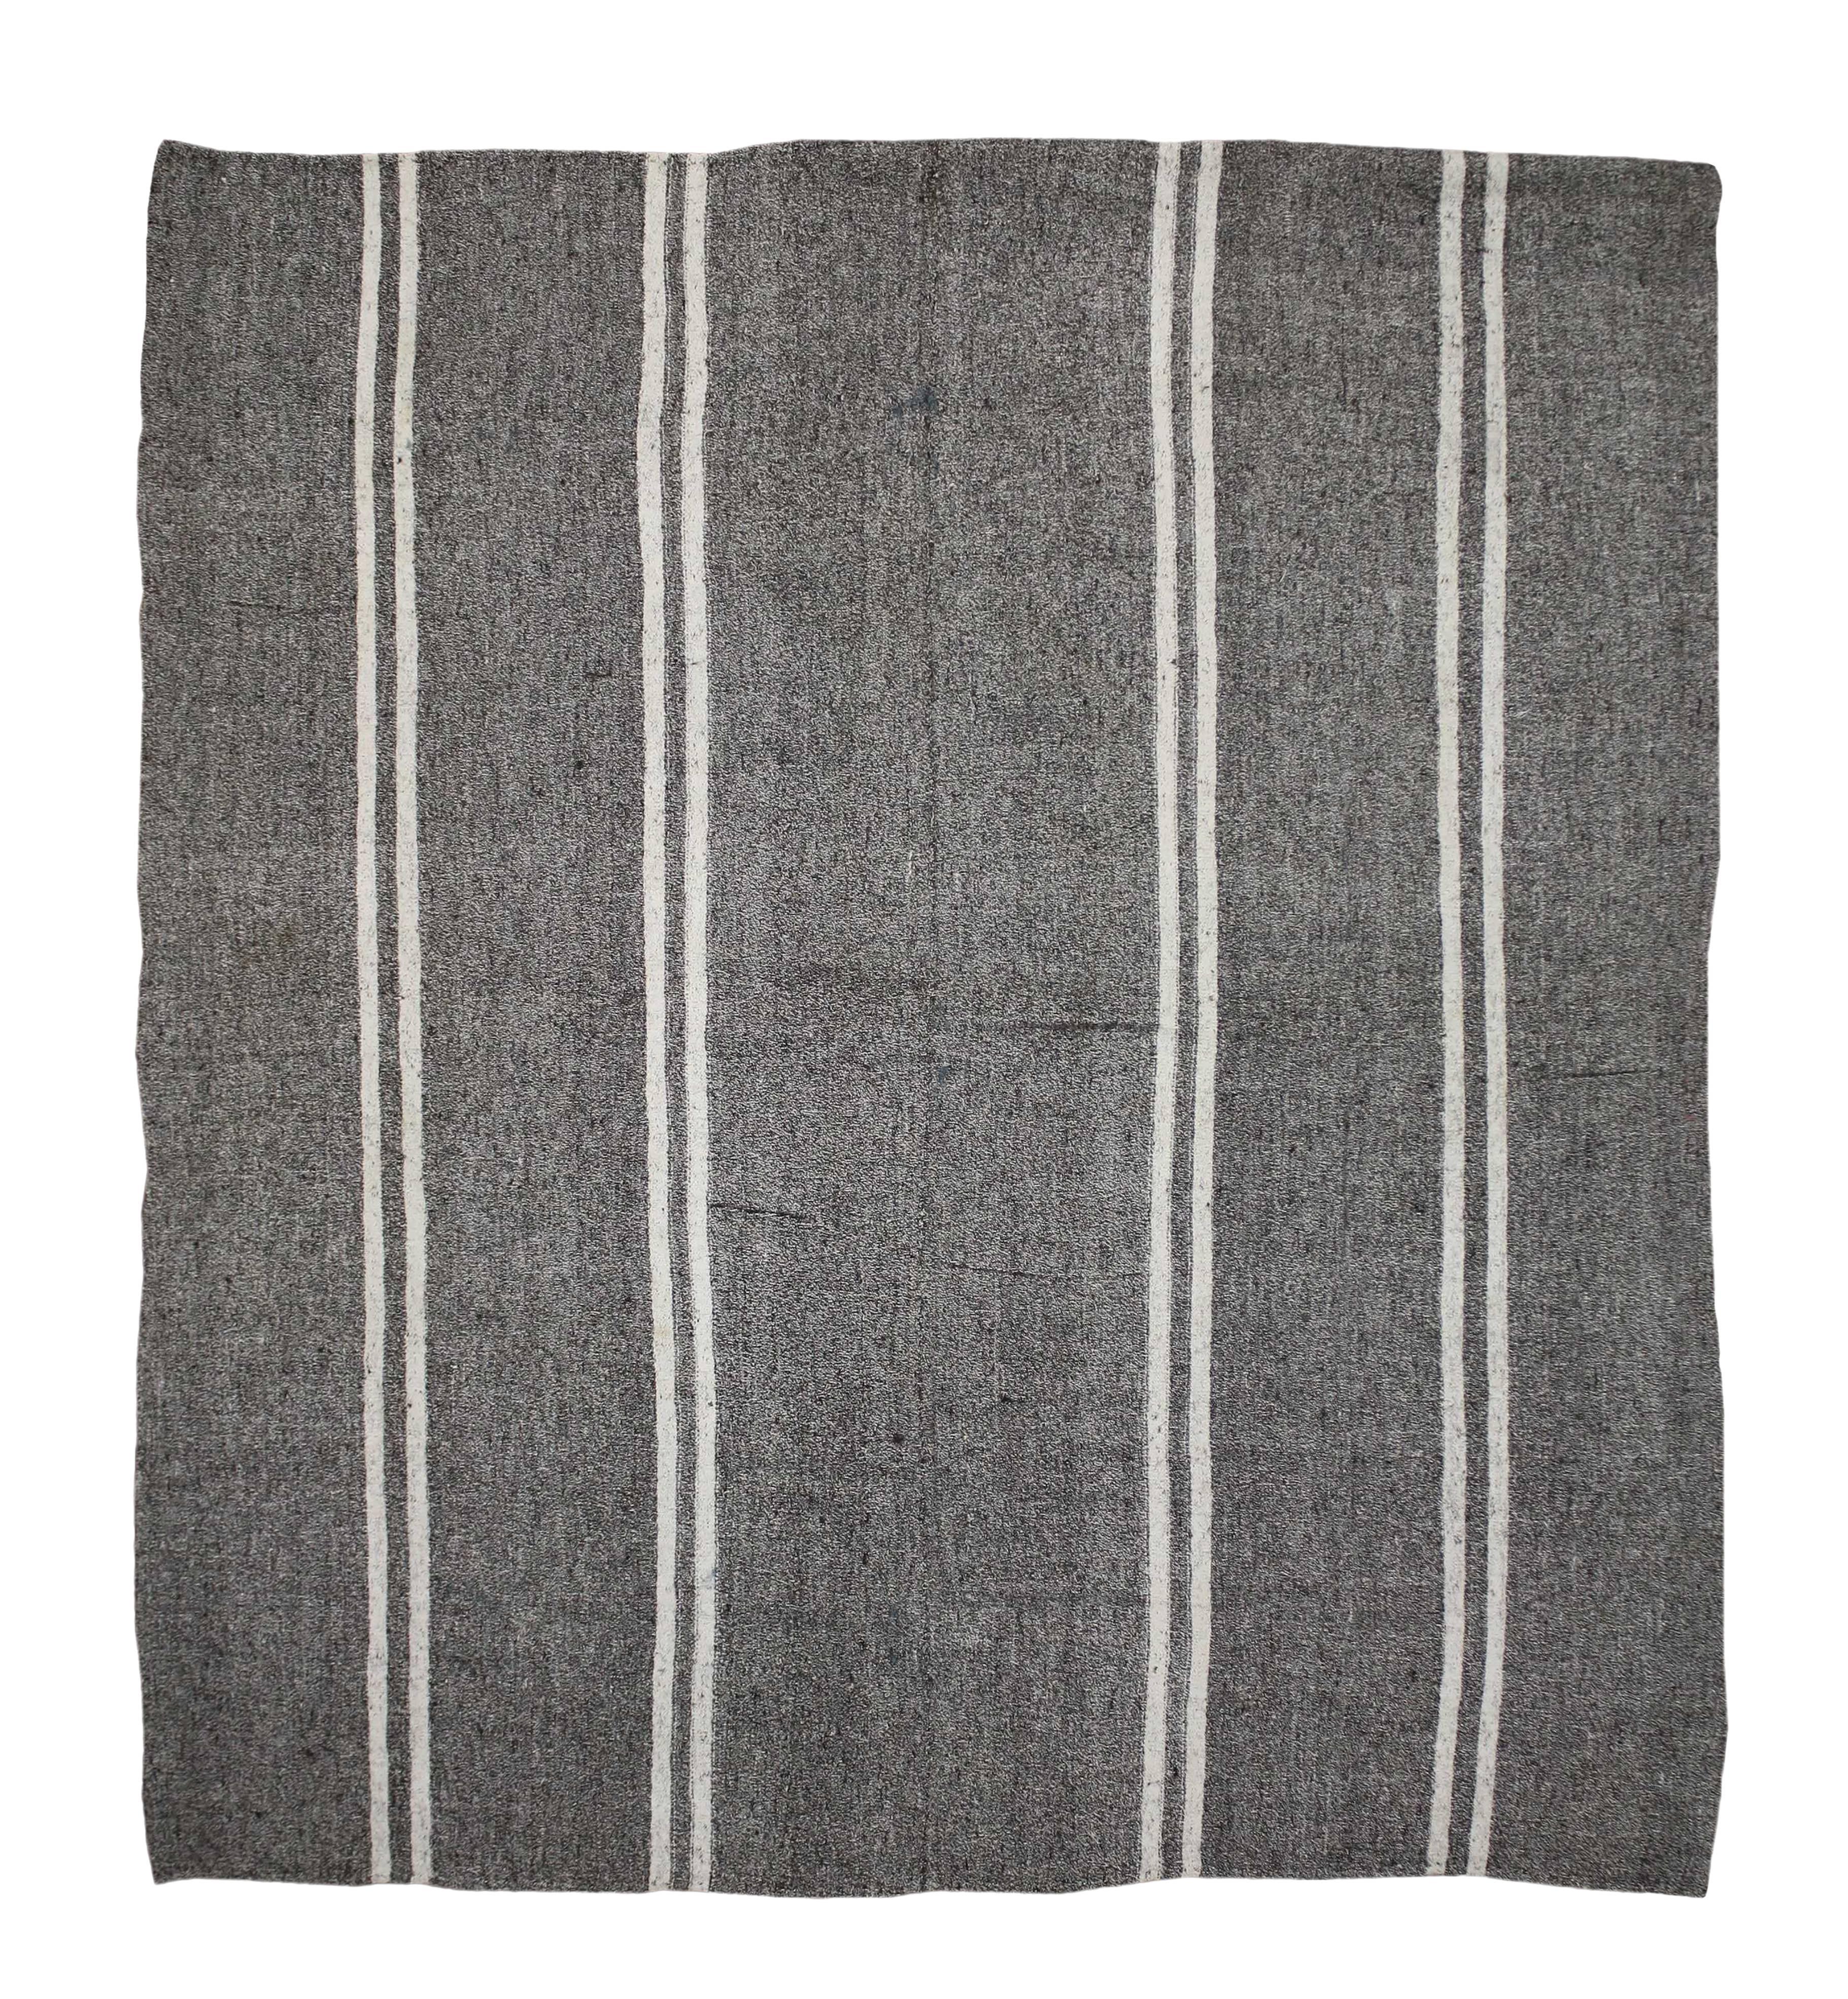 20th Century Modern Vintage Gray Stripe Turkish Kilim Rug with Minimalist Style, Square Rug